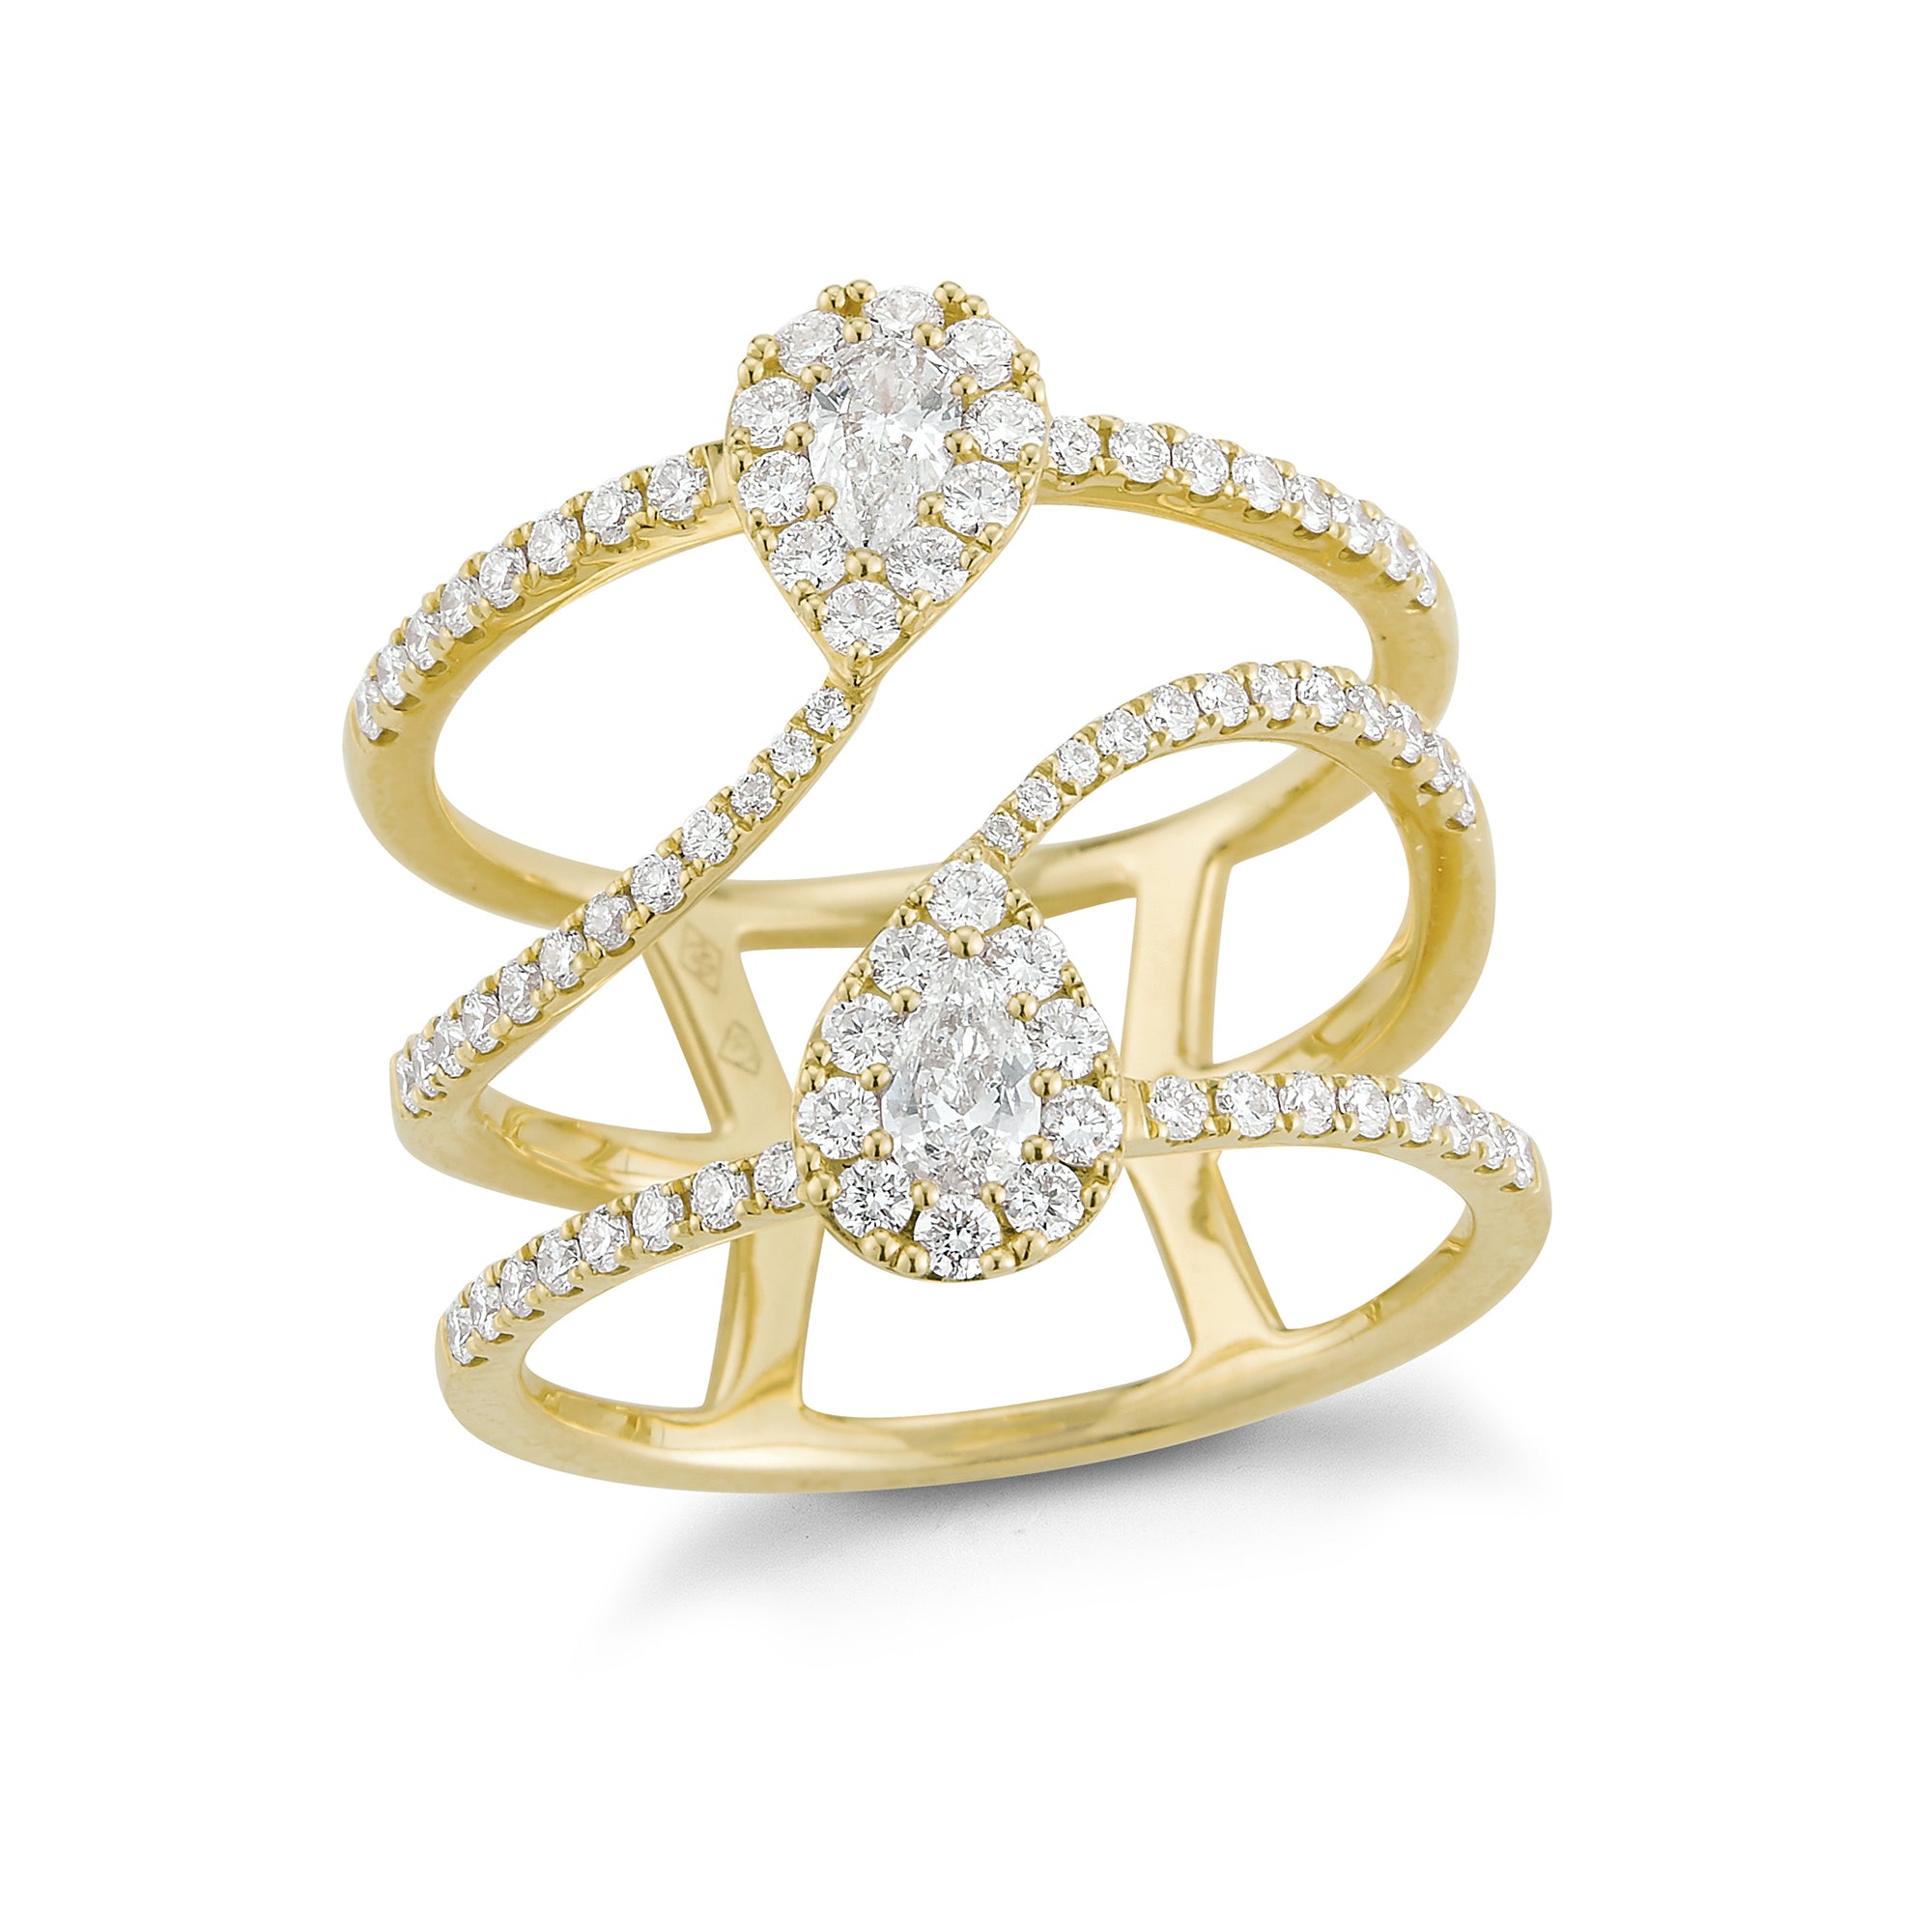 Diamond Pear-shaped Fashion Ring  18k gold, 5.48 grams  -76 round four prong-set diamonds .63 carats  -2 pear shaped diamonds .24 carats.